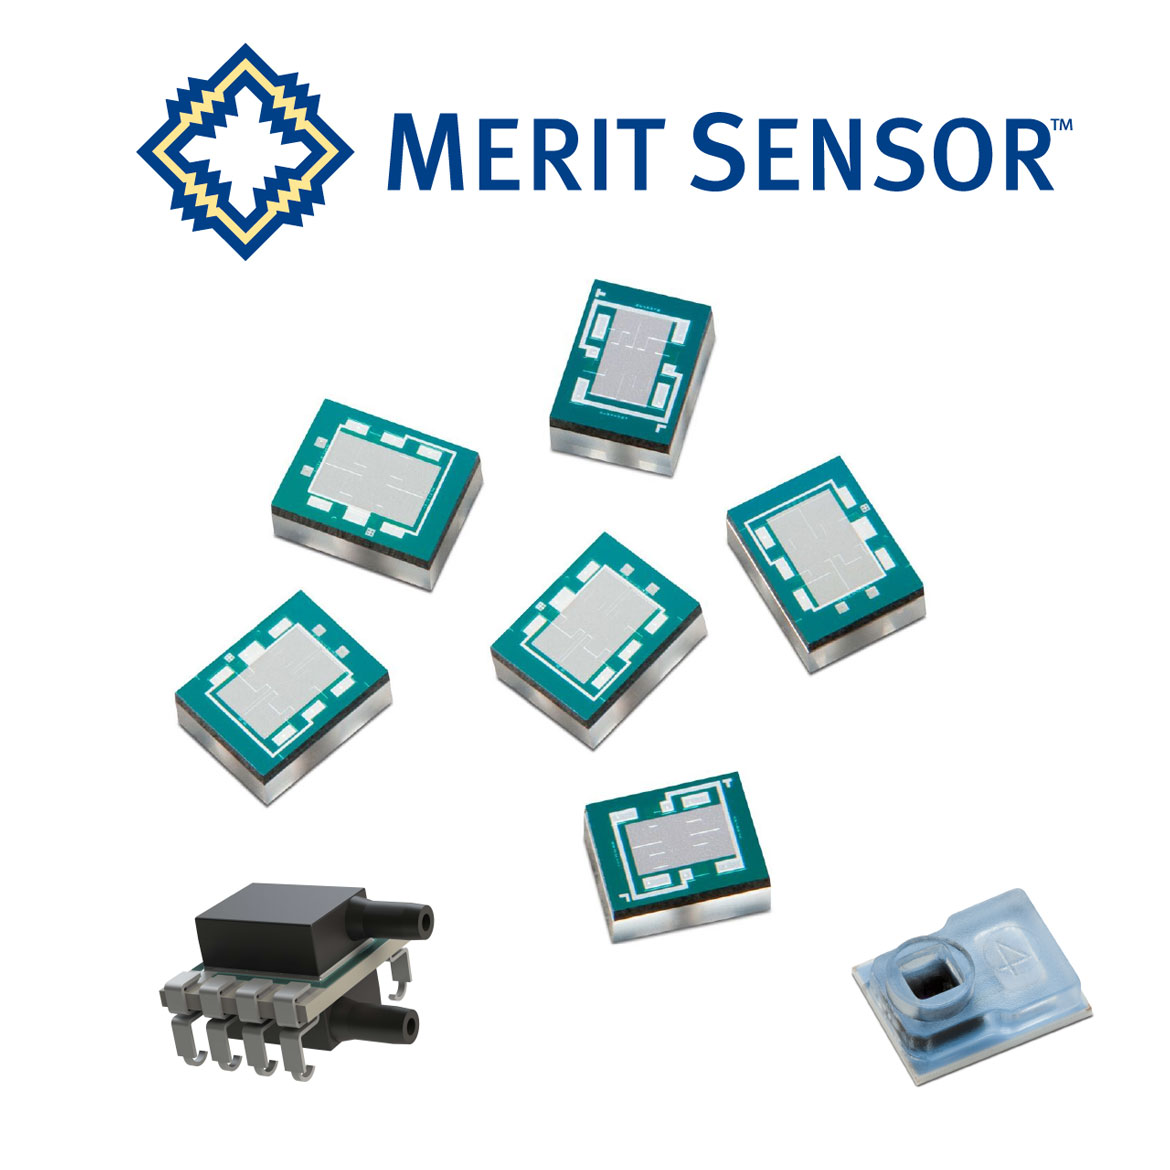 Merit Sensor ロゴと製品のイメージ